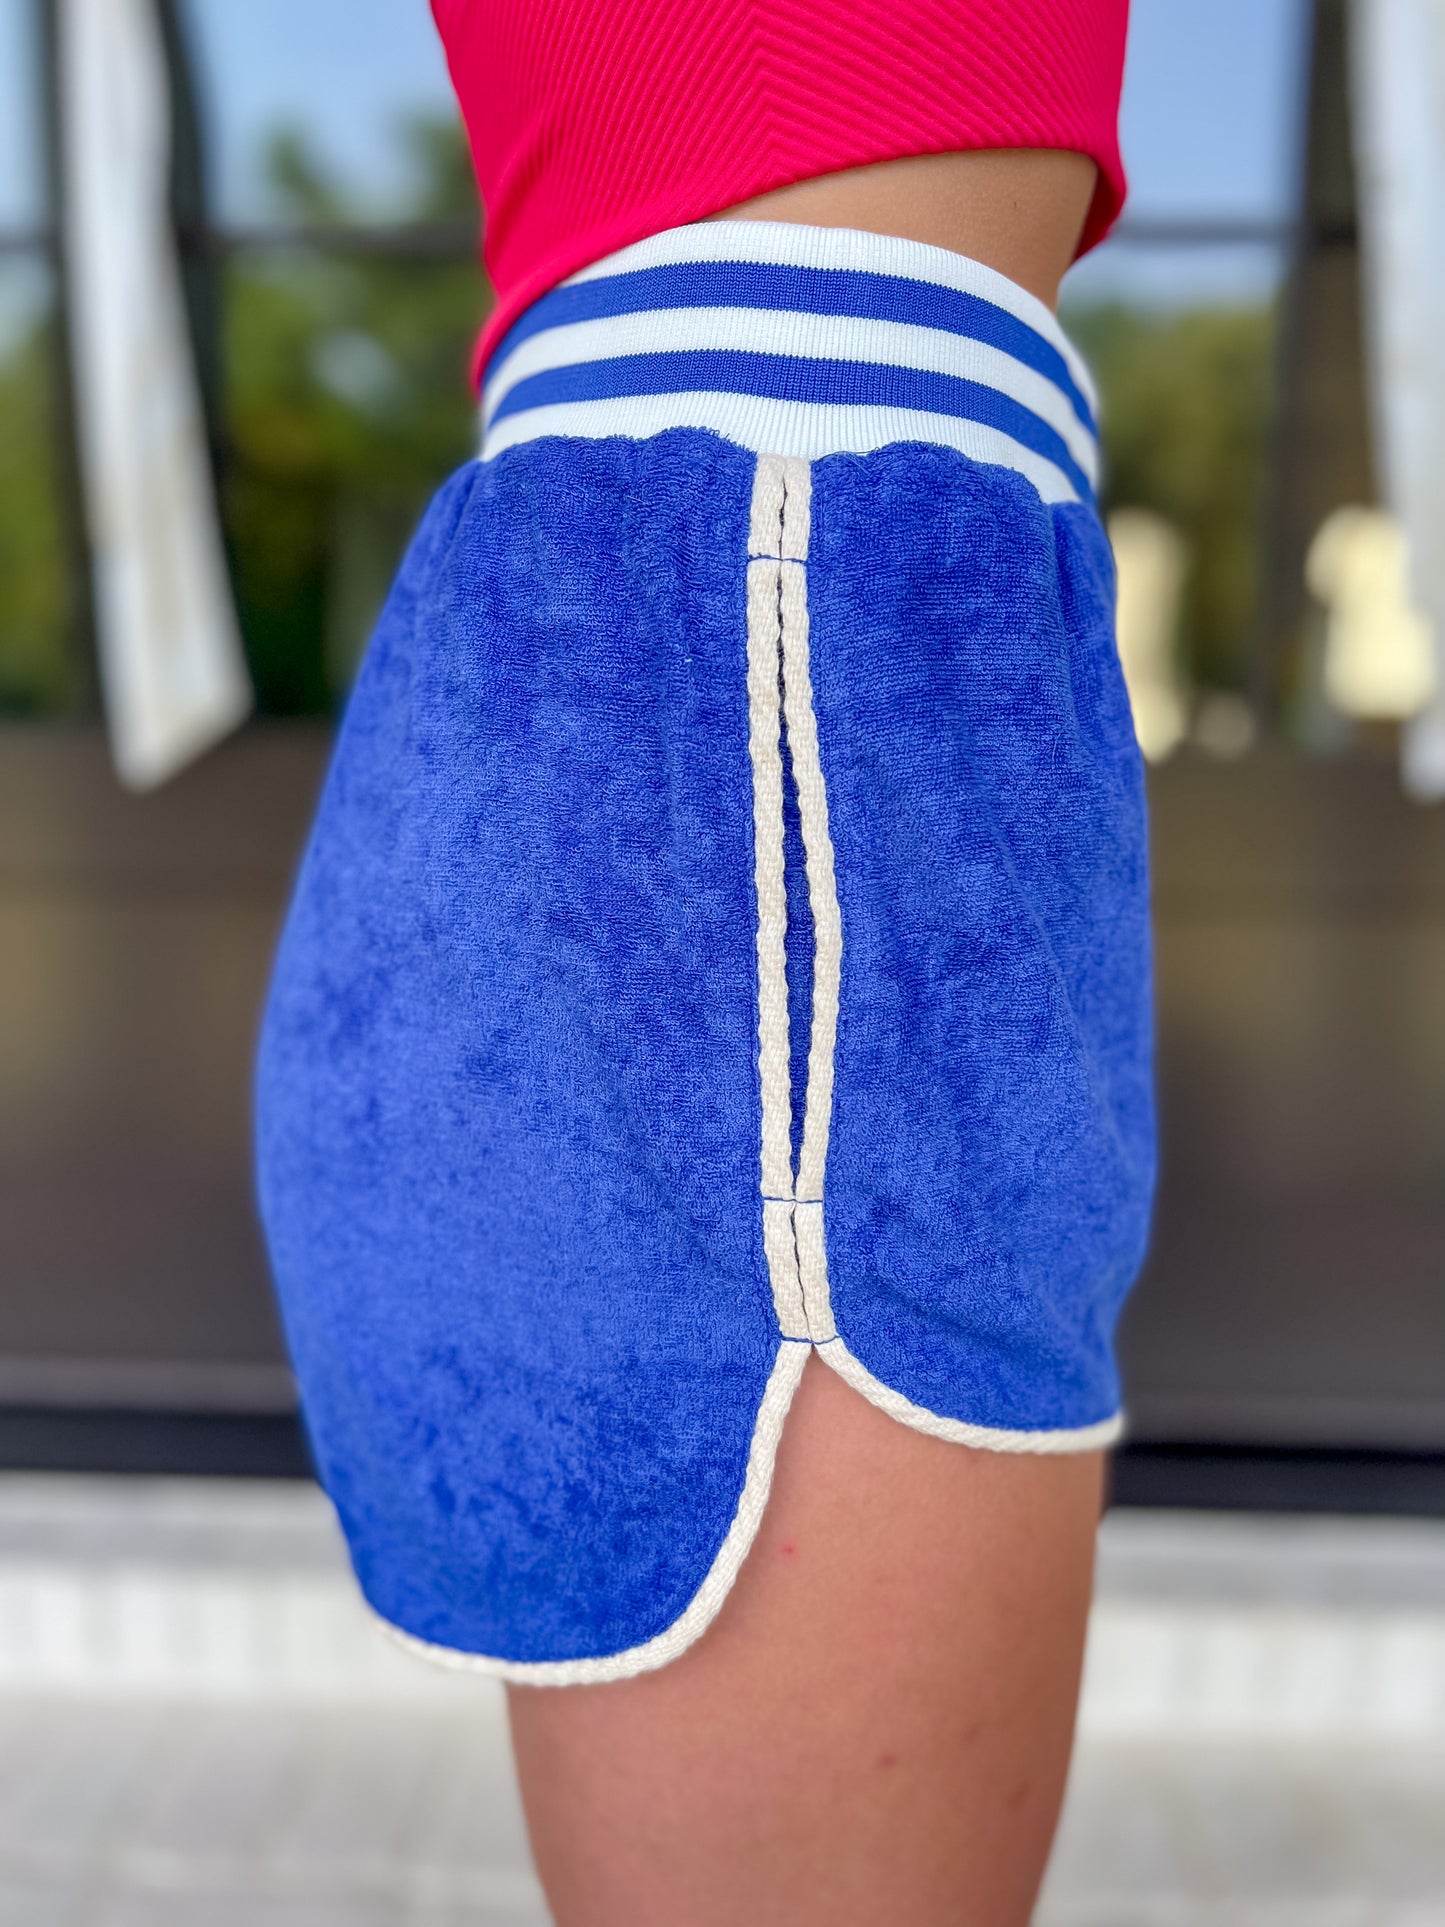 Benny Beachside shorts